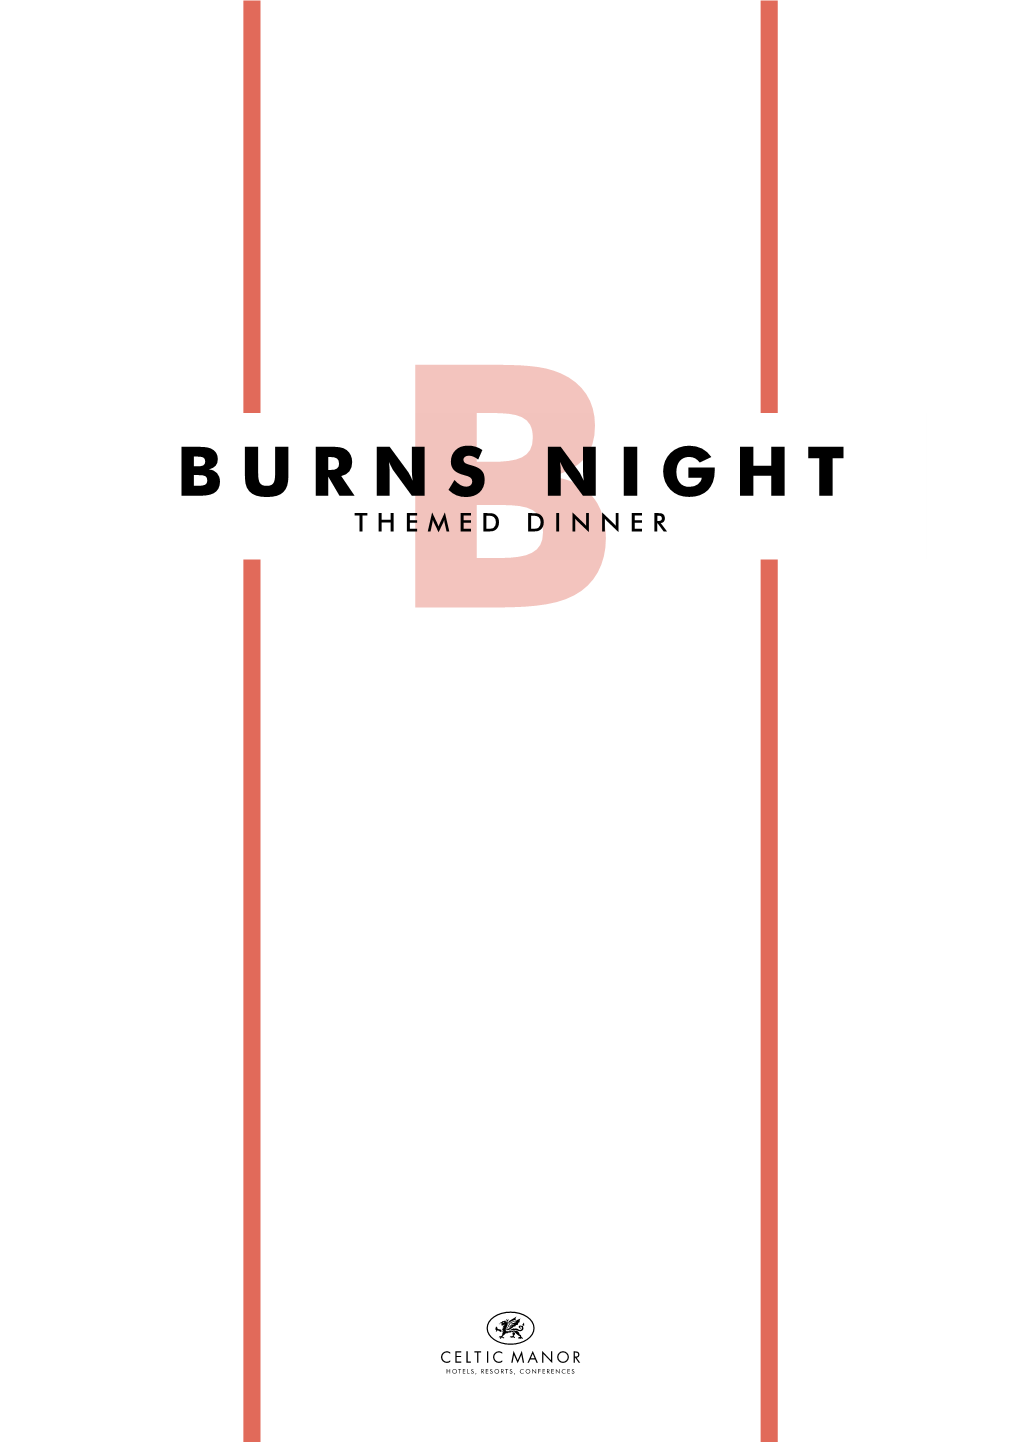 Burns Night Themed Dinner Dinner Menu Friday 25Th January 2019